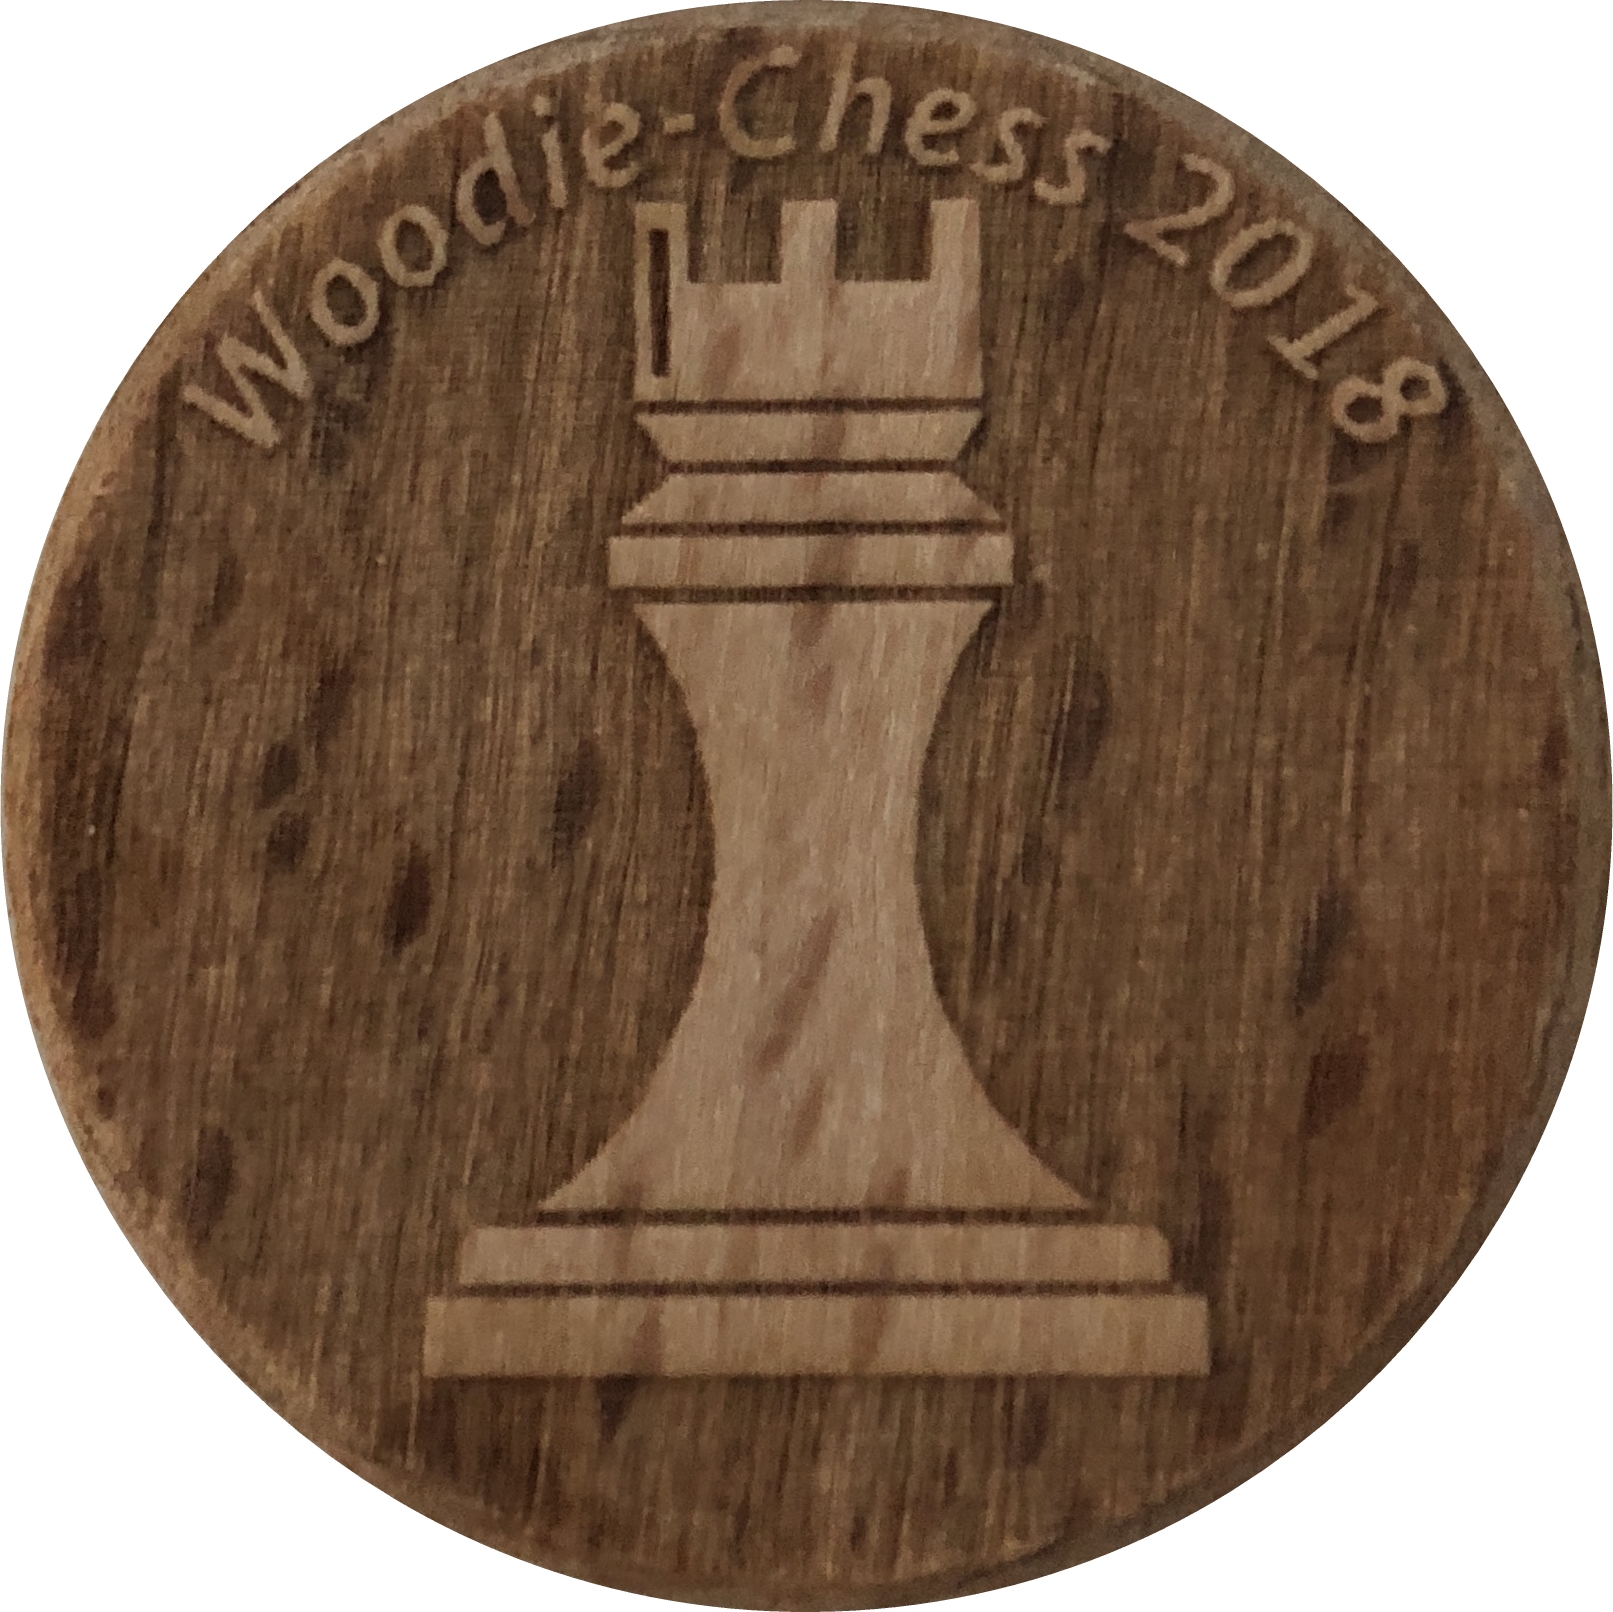 Woodie_Chess_2018_Tintenklexx&JavaJim_back.jpg